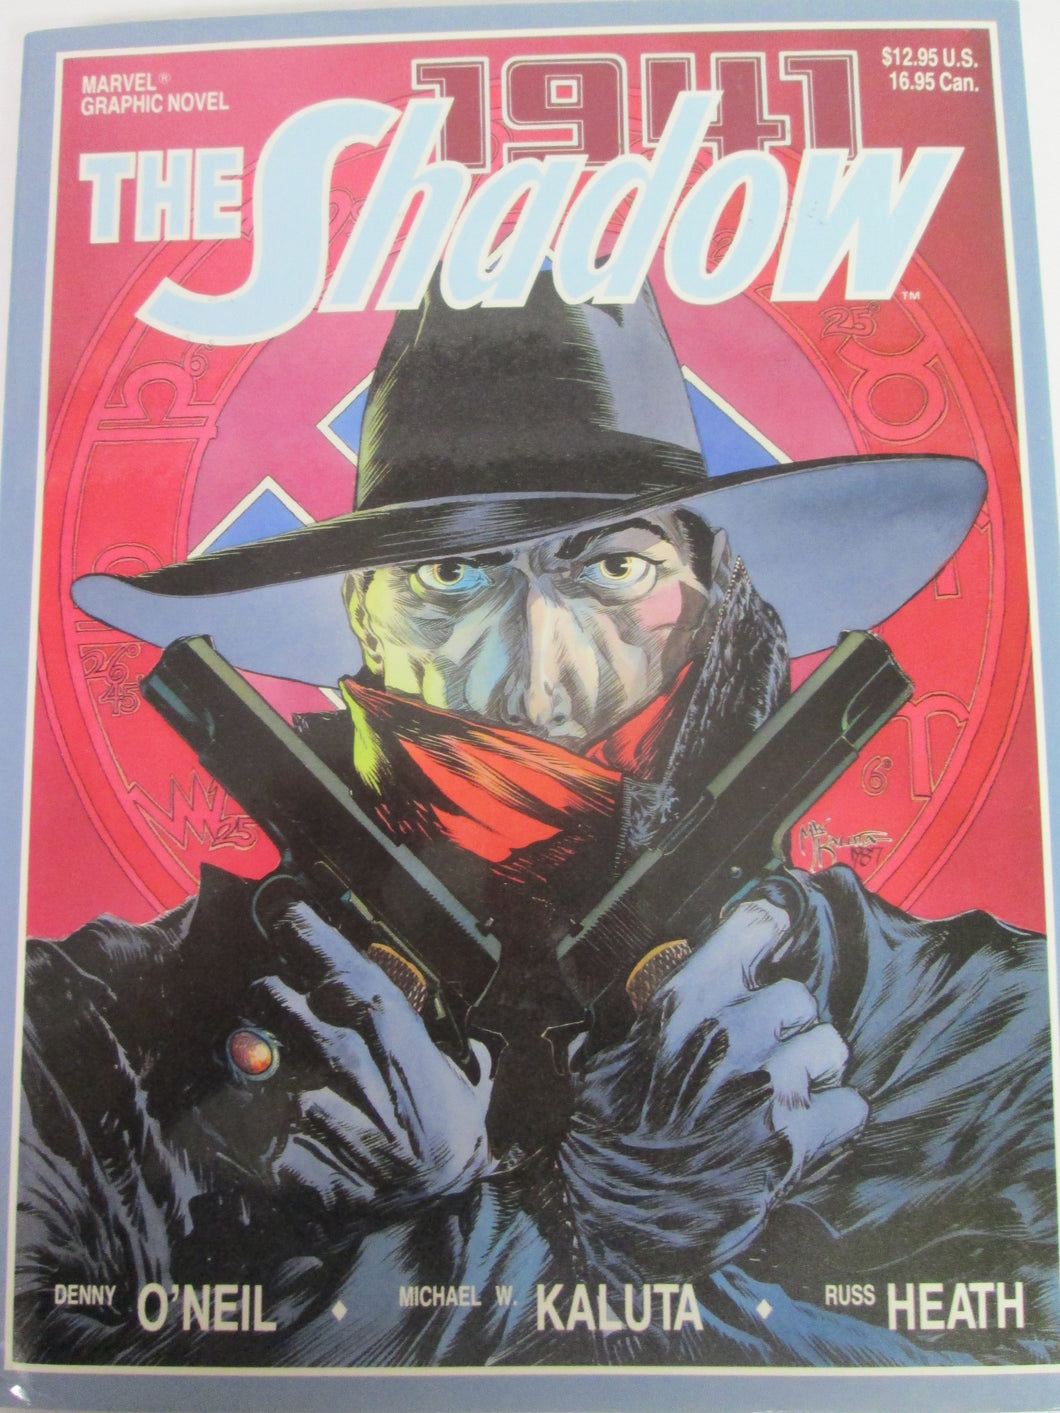 The Shadow 1941 Marvel Graphic Novel by Denny O'Neil, Kaluta & Heath 1988 HC